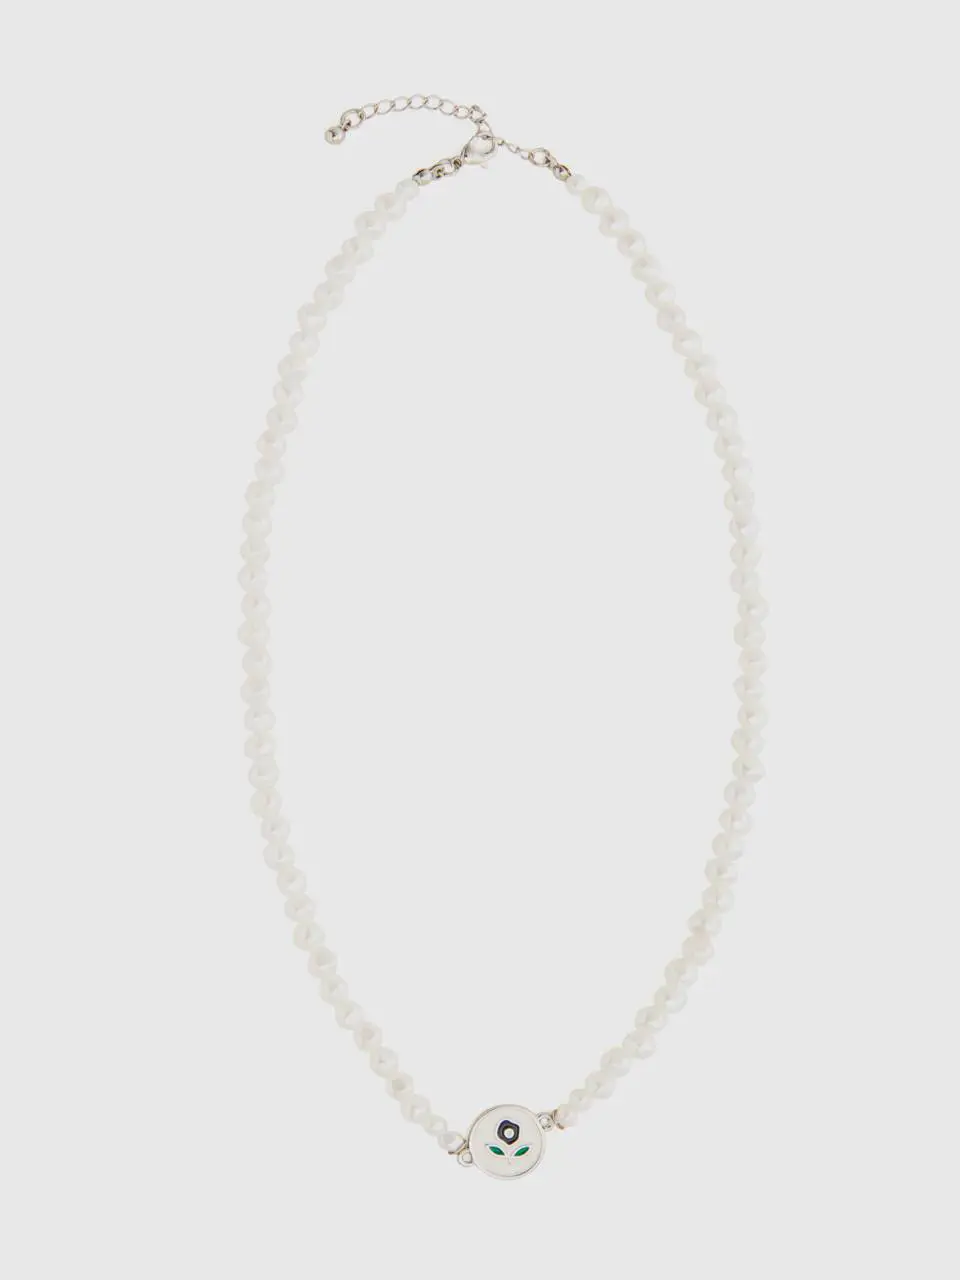 Benetton white pearl necklace with dark blue flower. 1